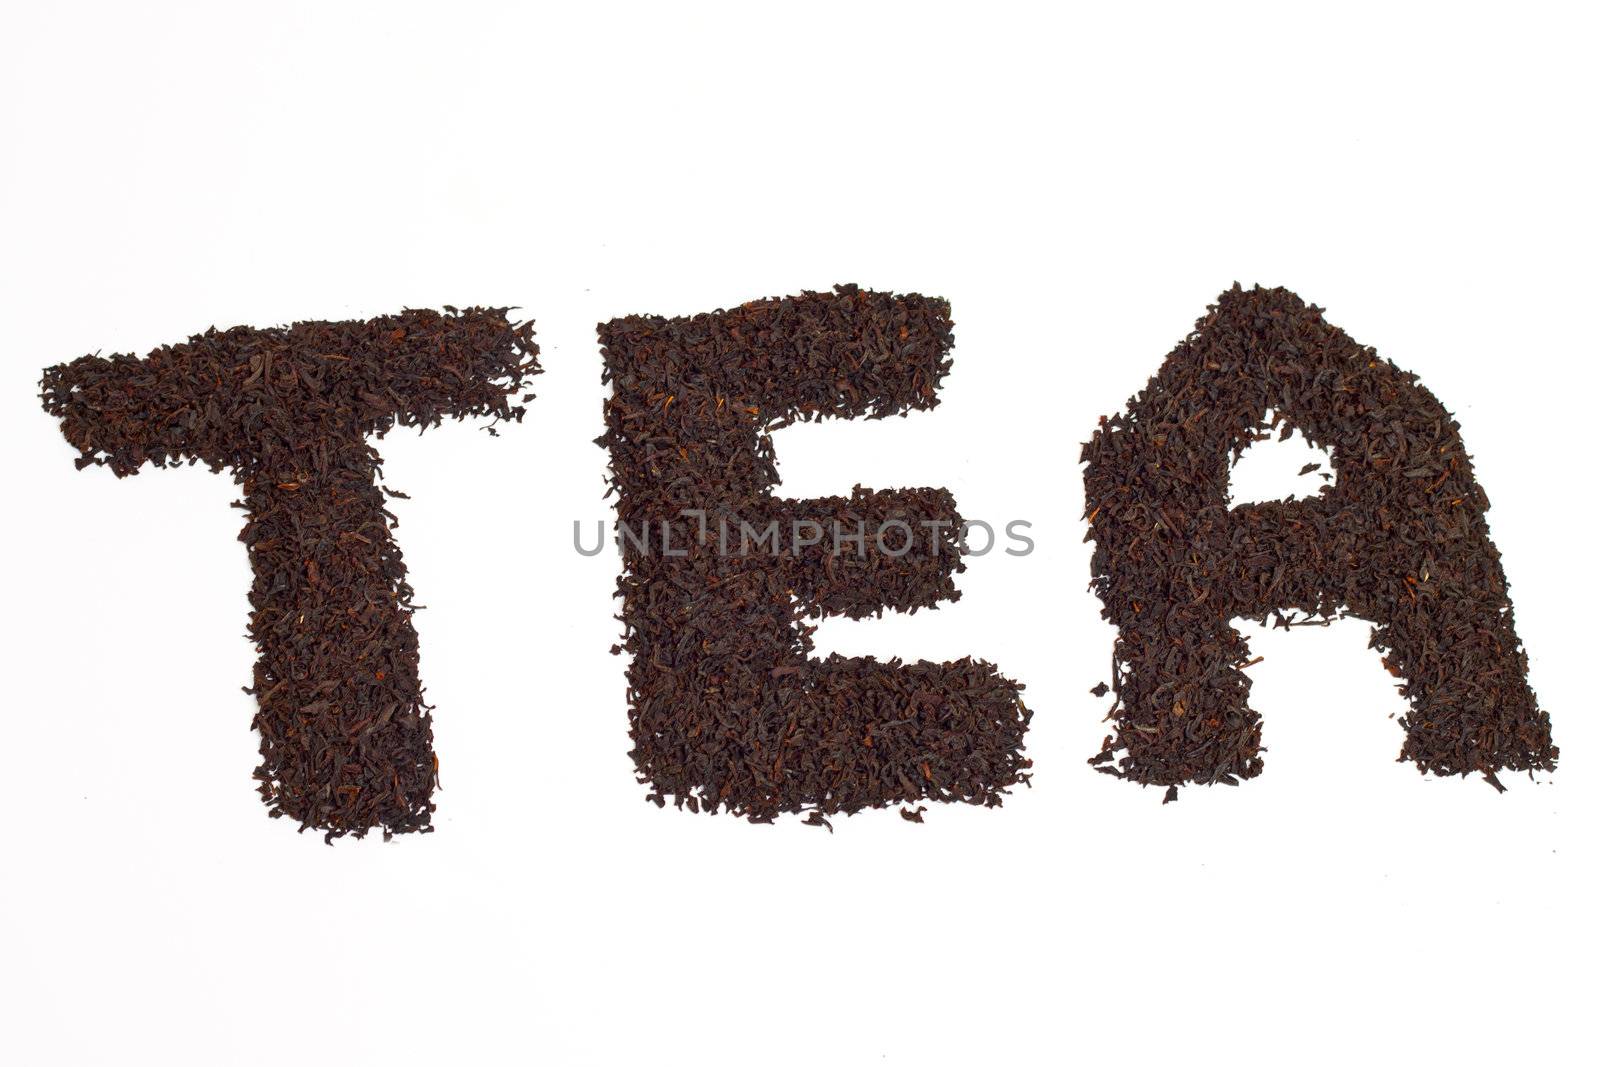 black tea on a white background by aziatik13